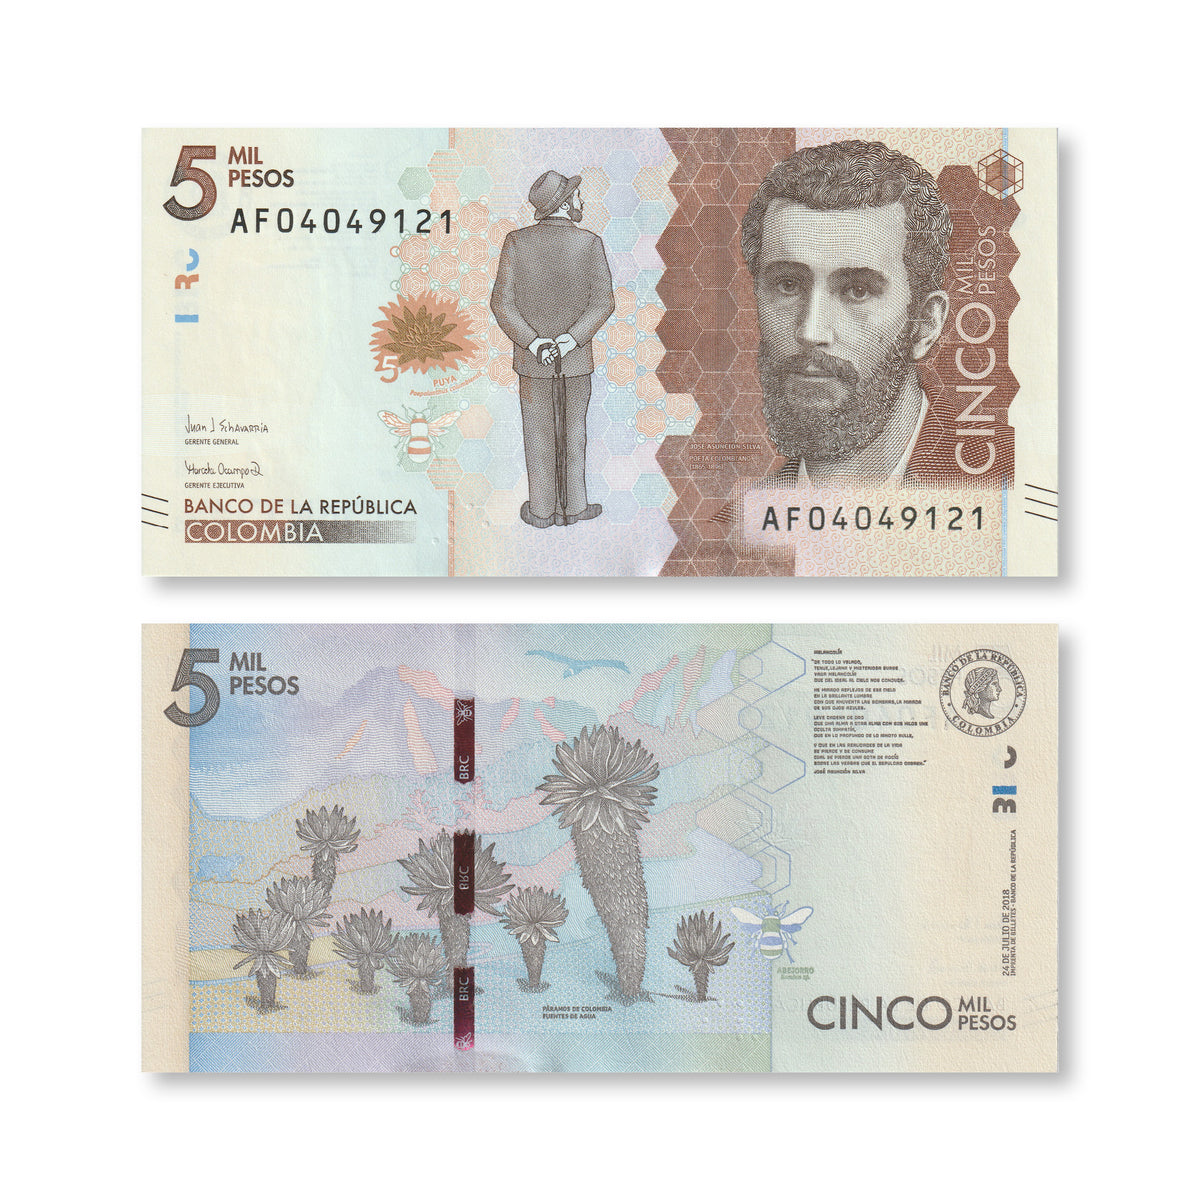 Colombia 5000 Pesos, 2018, B994d, P459, UNC - Robert's World Money - World Banknotes